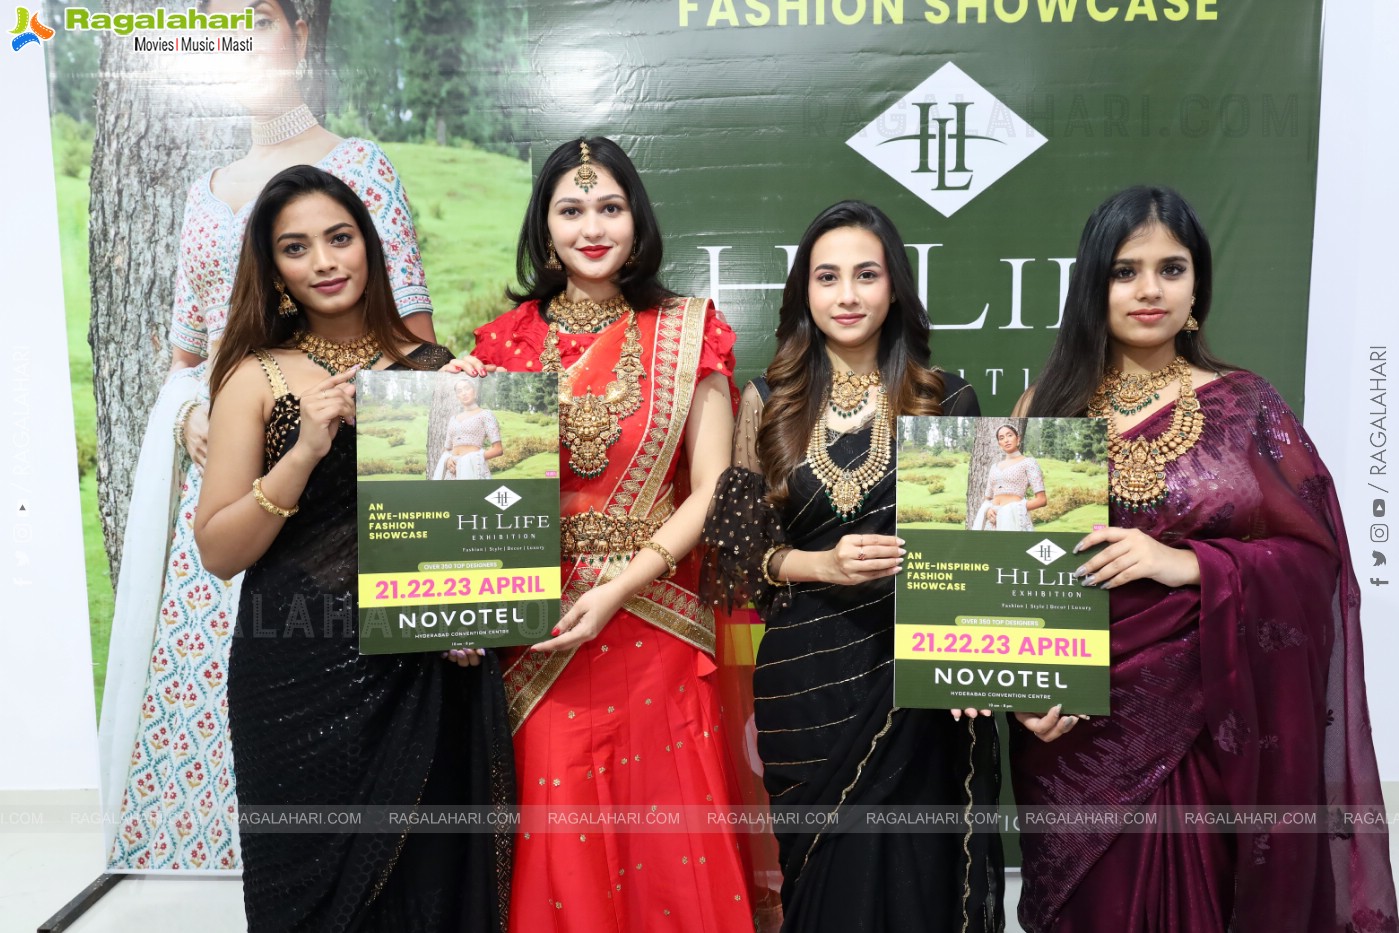 Hi Life Exhibition Apr2023 Curtain Raiser Event, Hyderabad